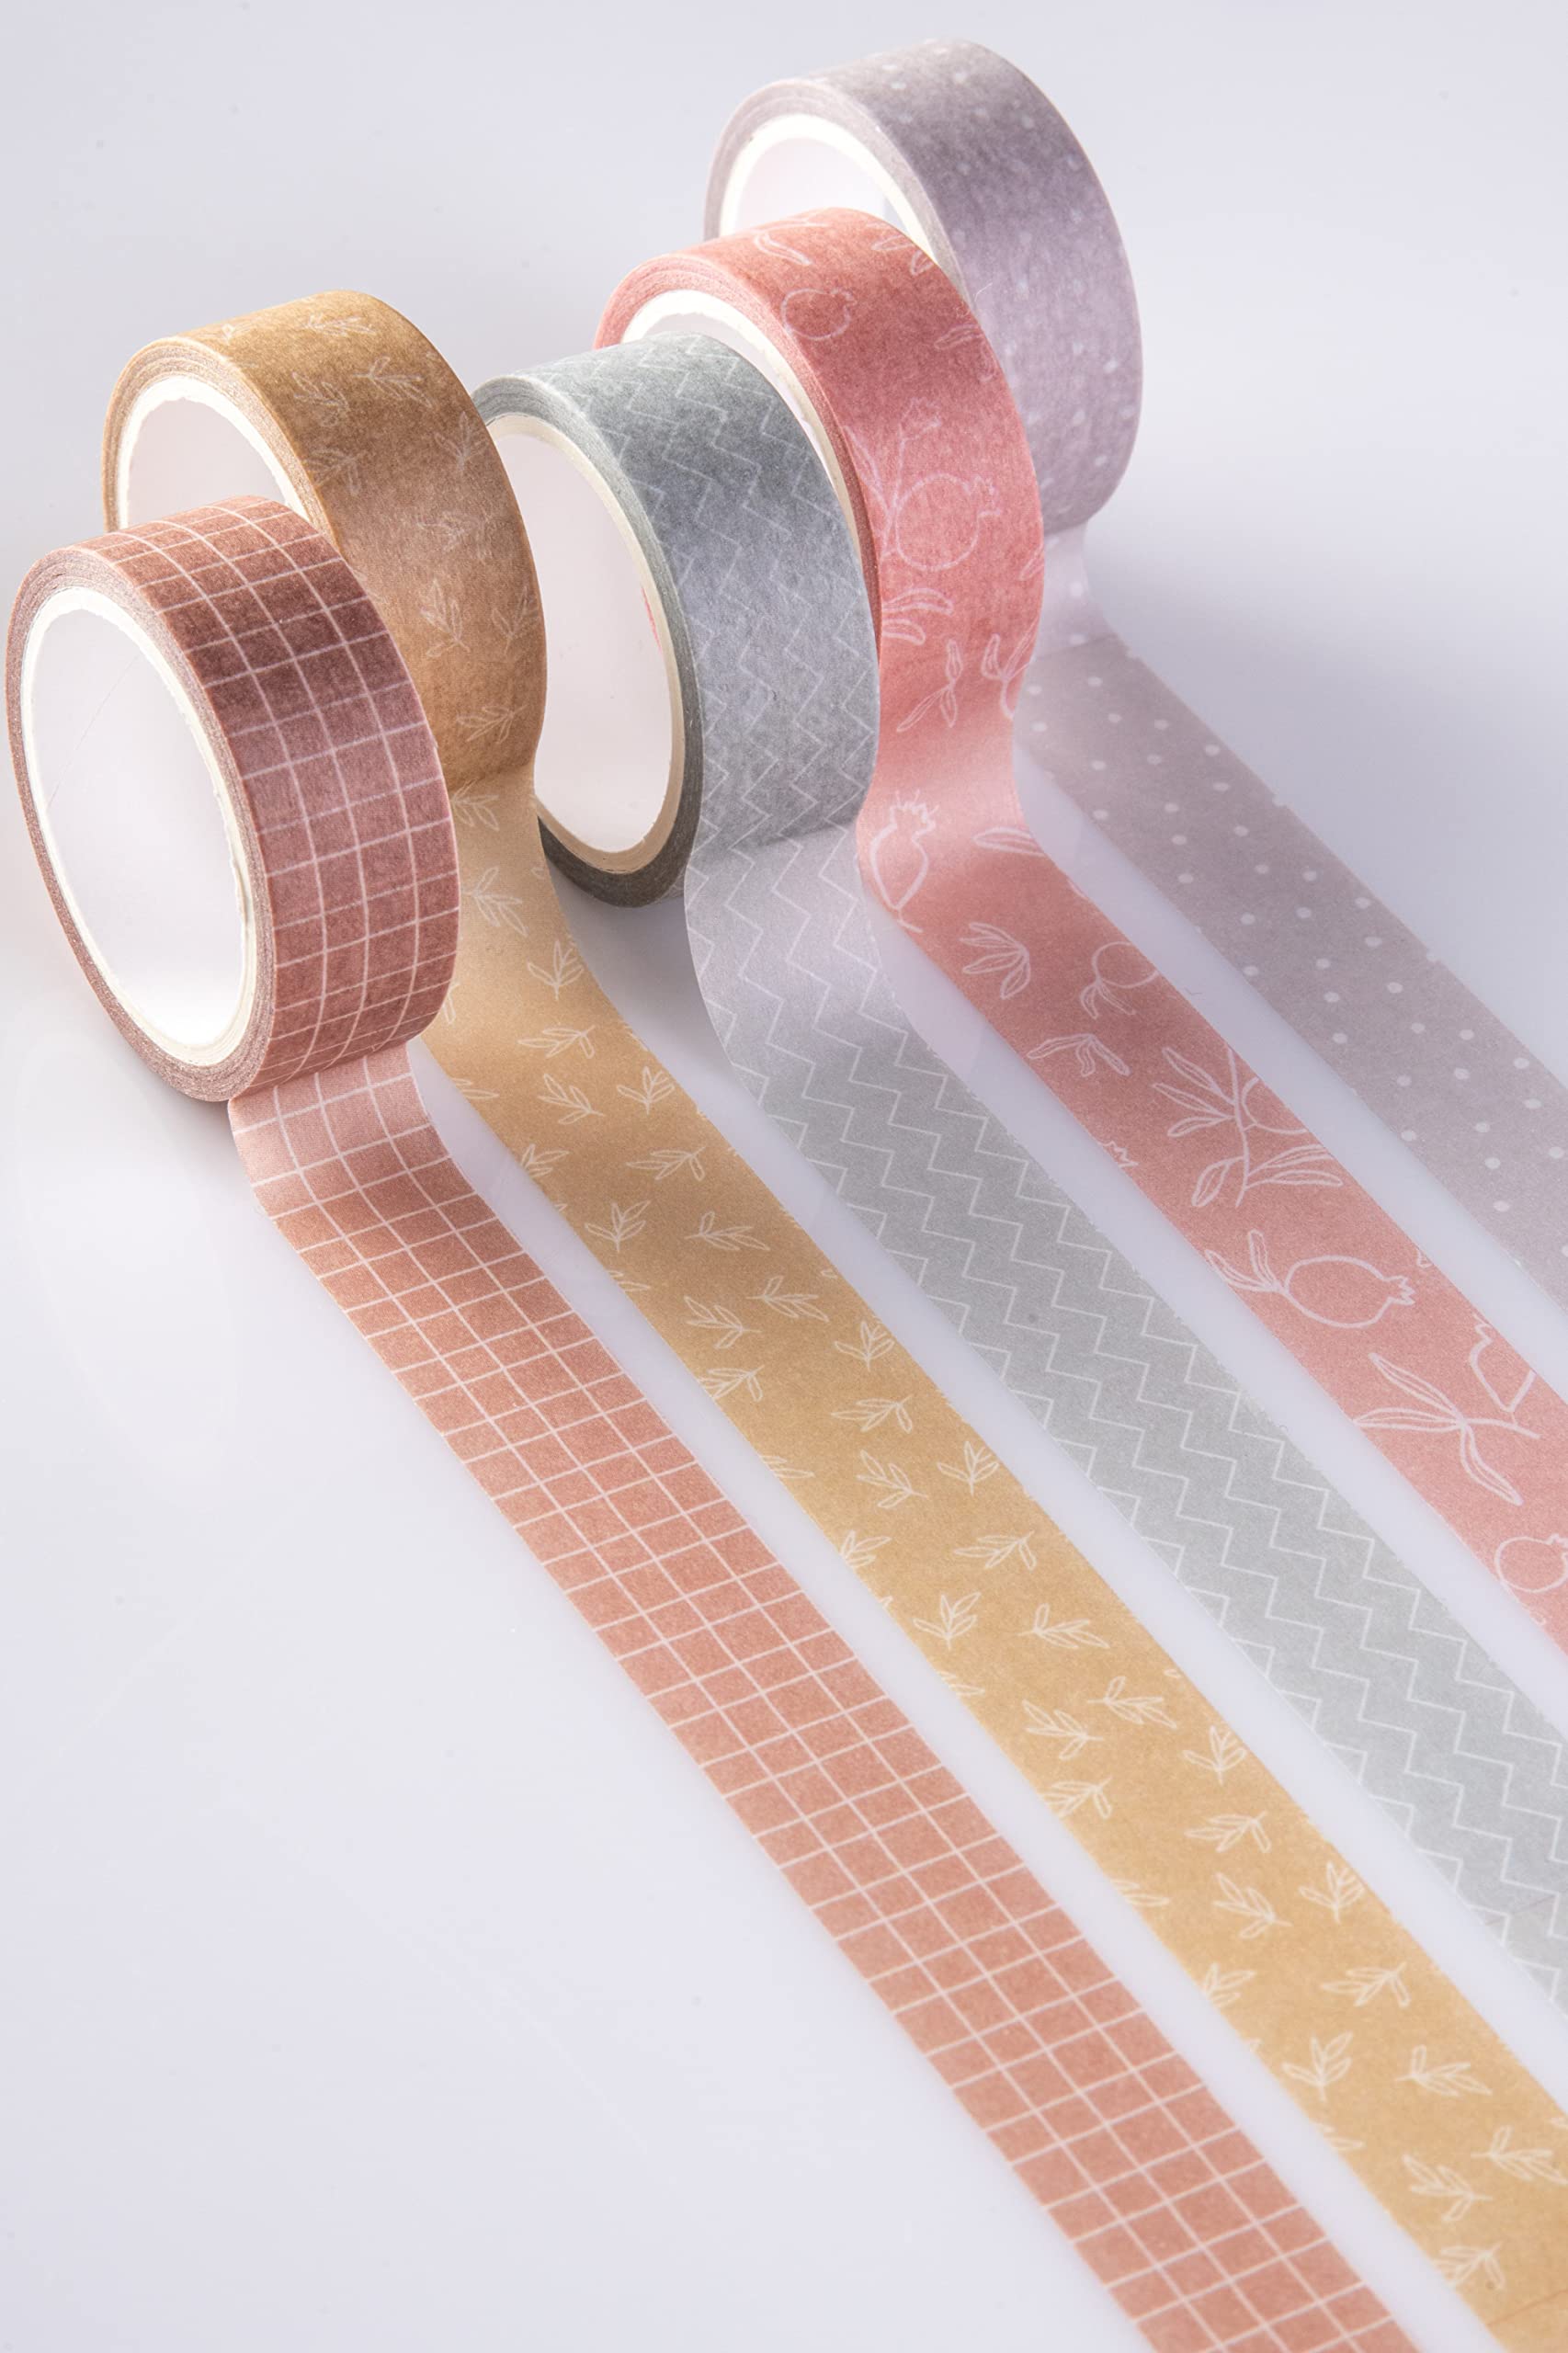 DIVERSEBEE Pastel Washi Tape Set, 5 Rolls Decorative Scrapbook Tape, Cute  Craft Tape, Scrapbooking Bullet Journal